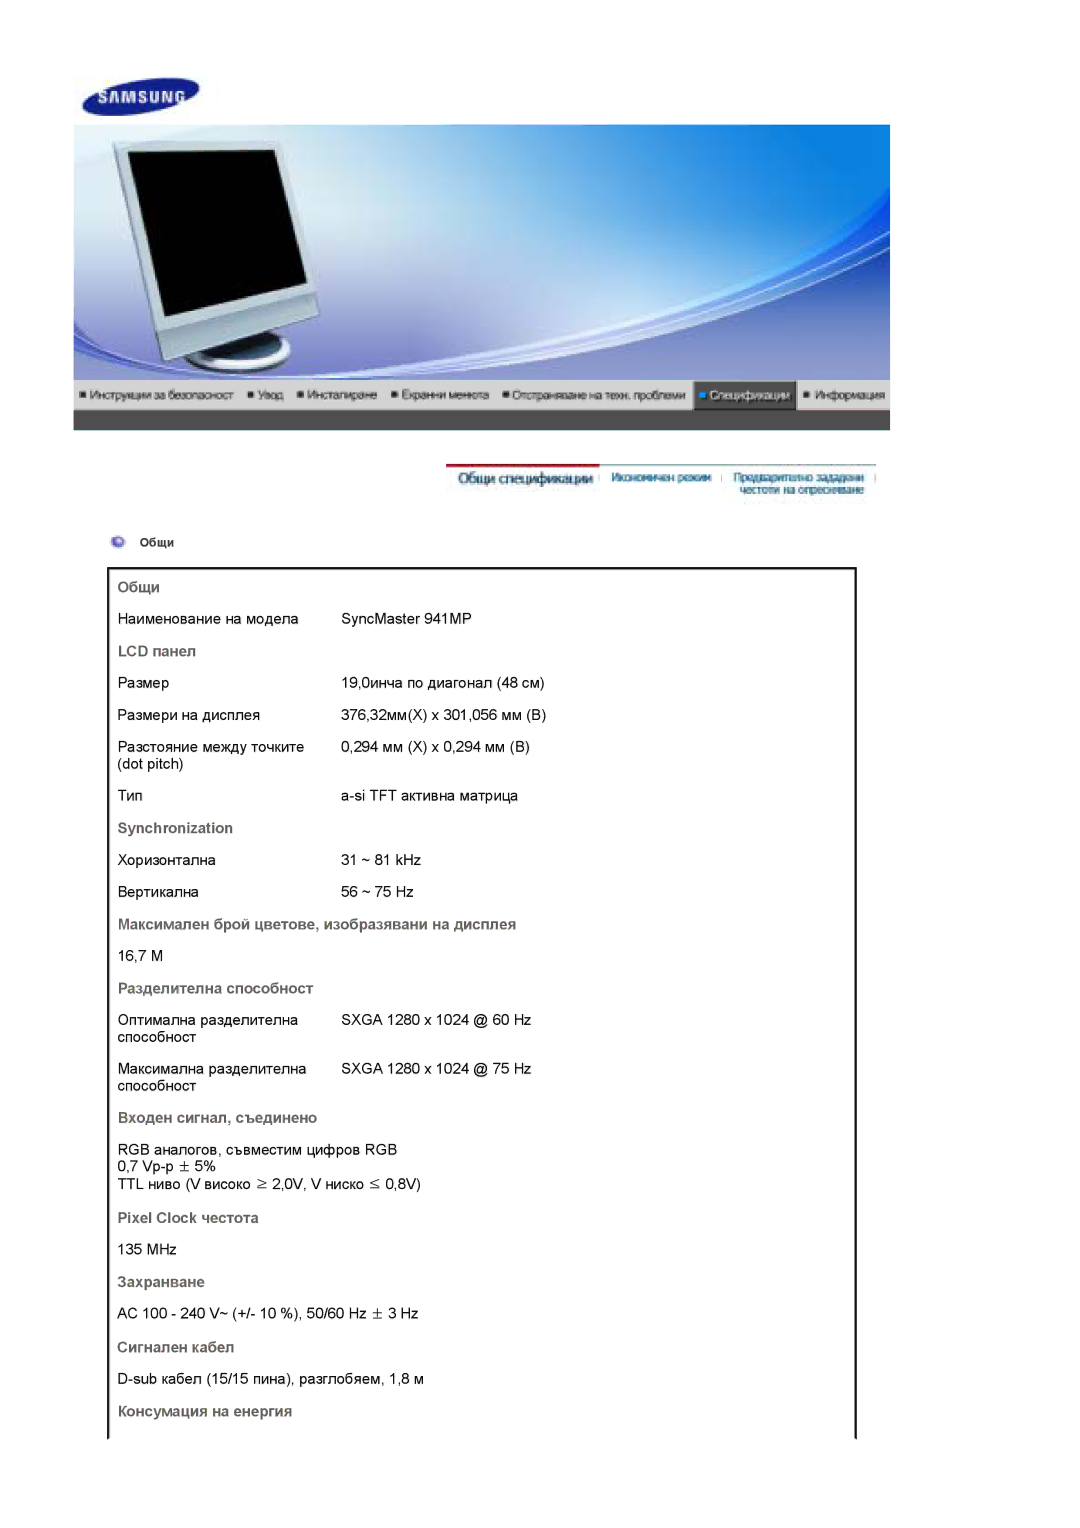 Samsung LS17DOASS/EDC, LS19DOASS/EDC manual Наименование на модела SyncMaster 941MP 